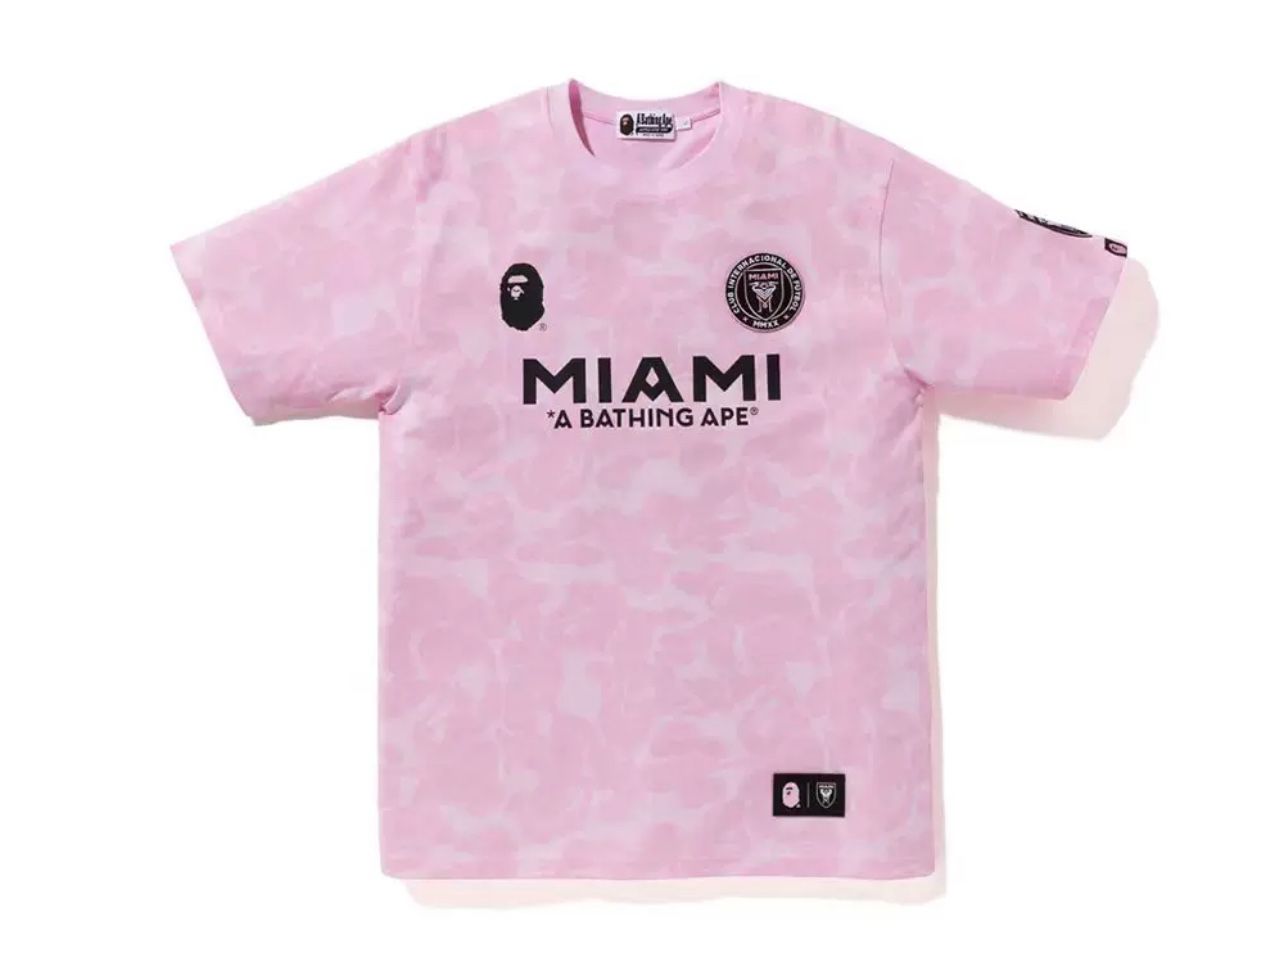 Bape x Miami Shirt (Size XL or XXL)